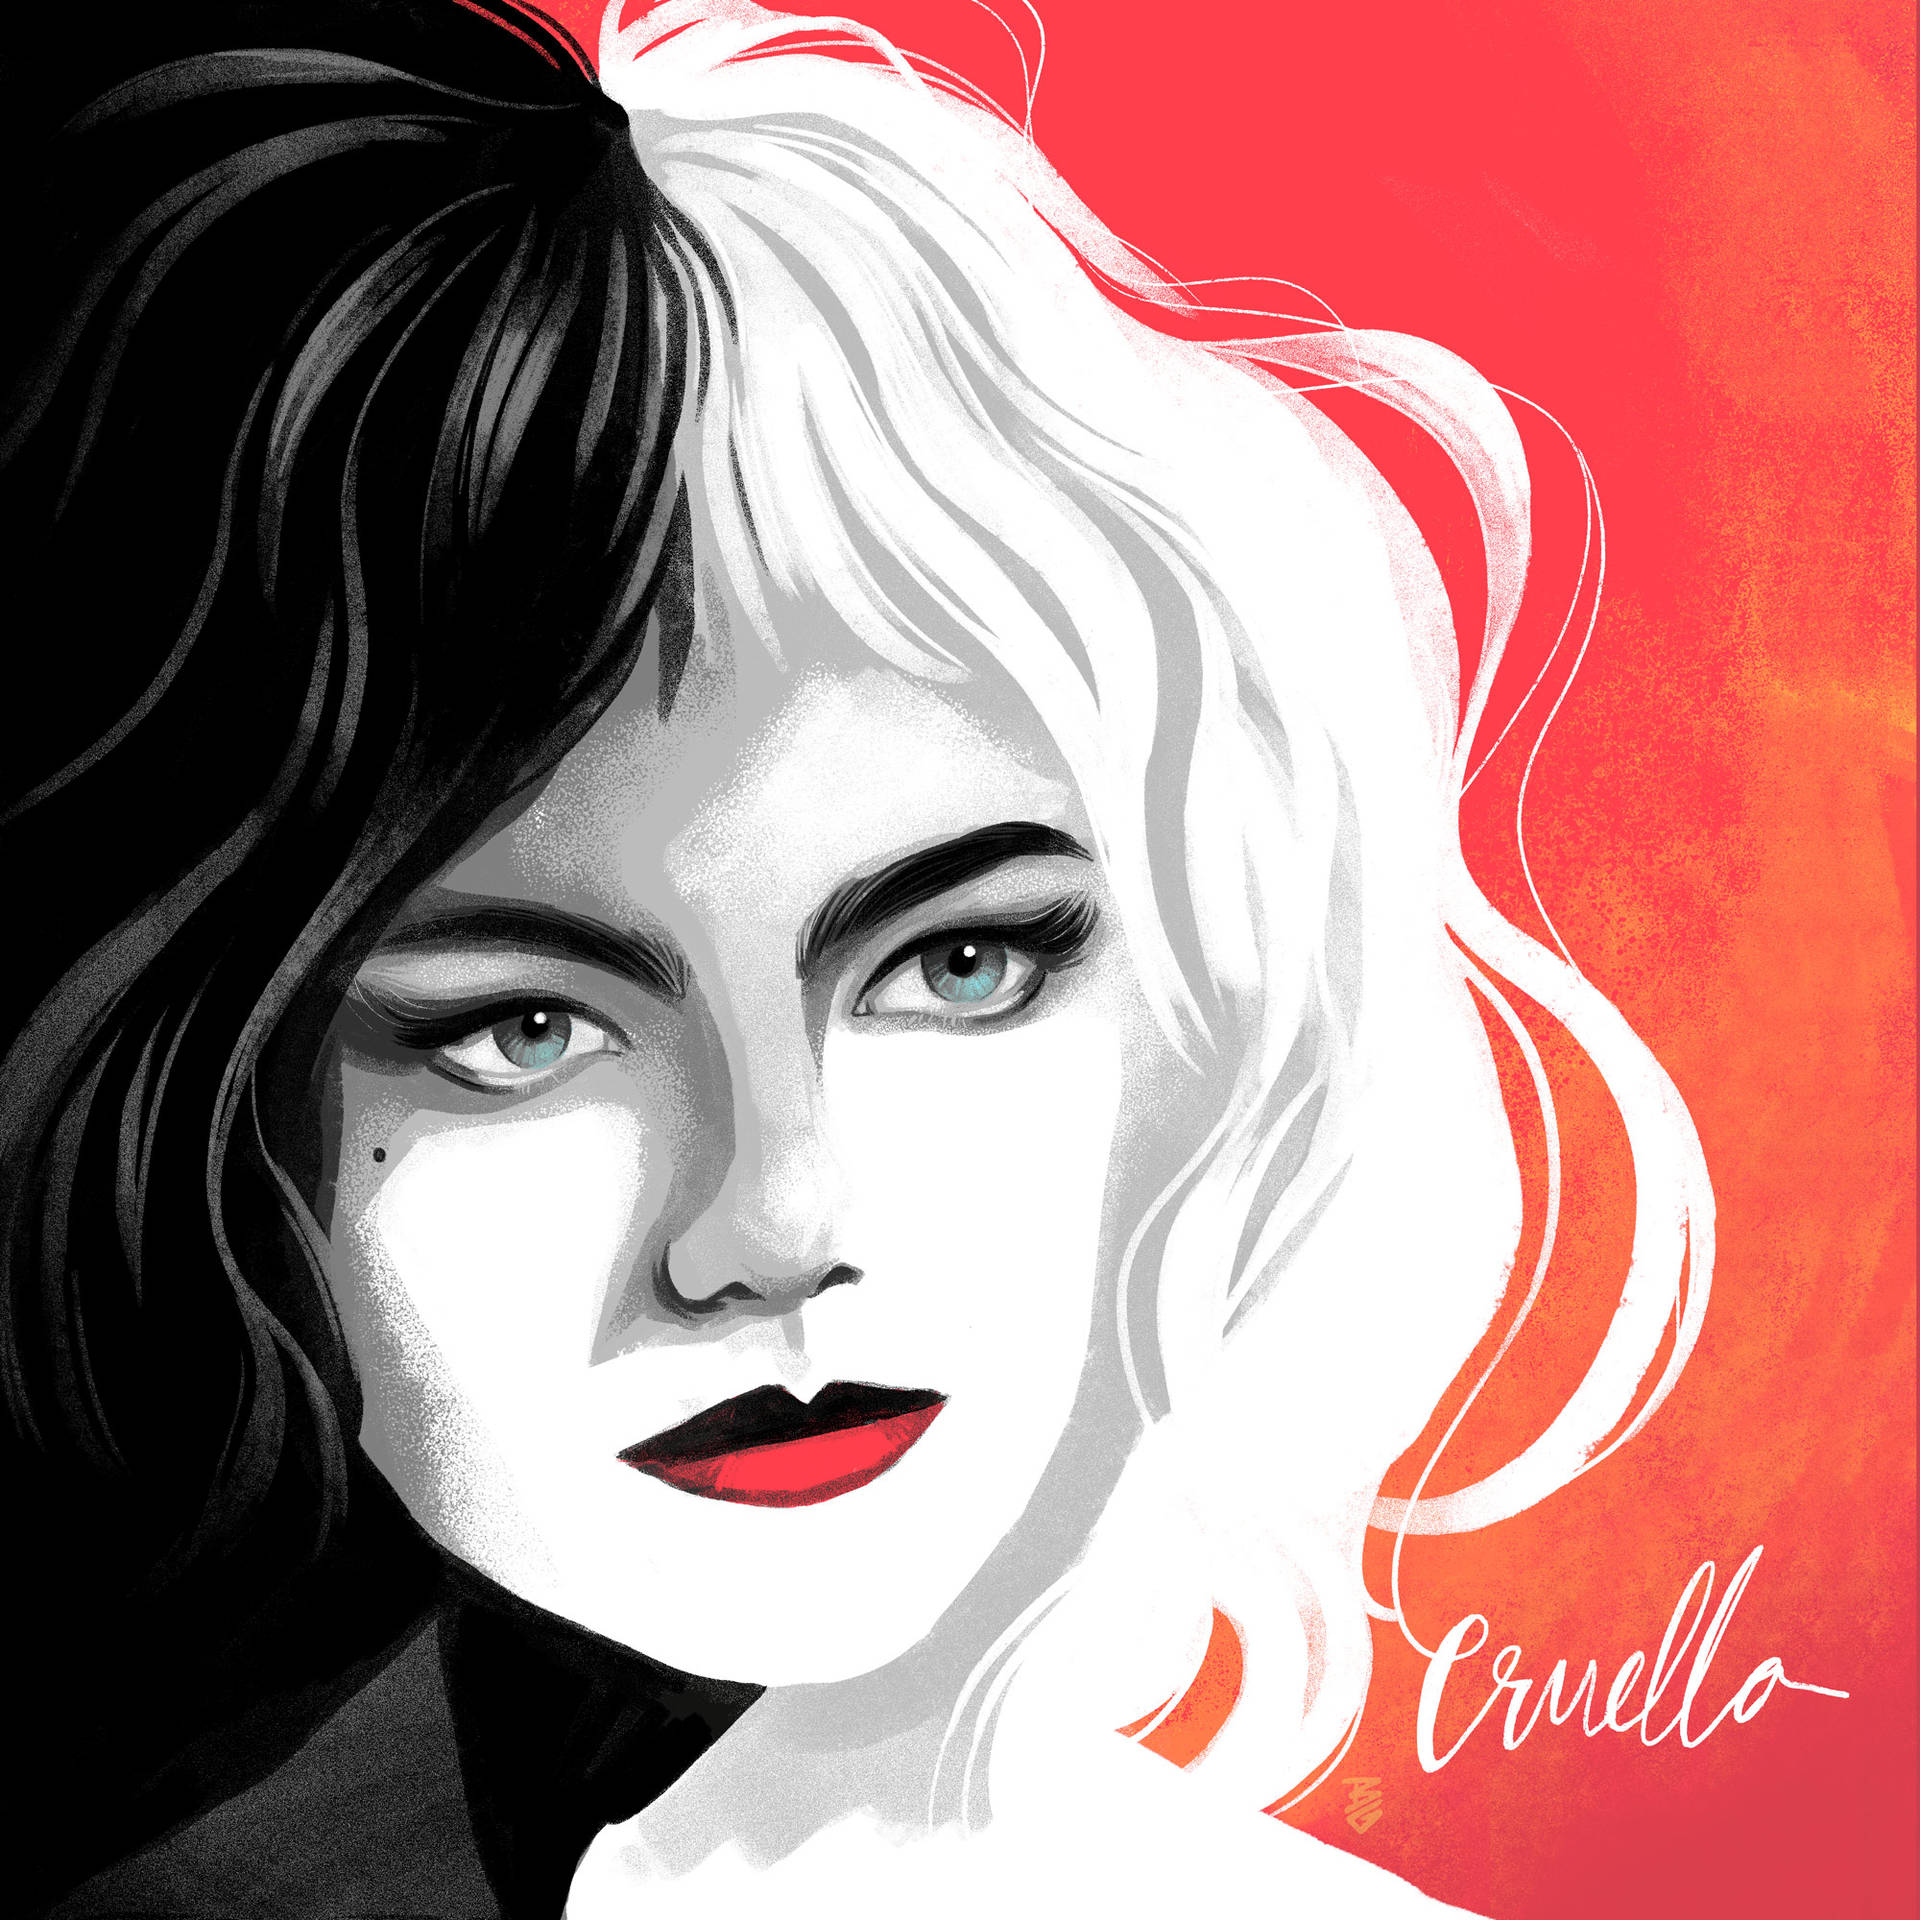 Cruella Digital Painting Background